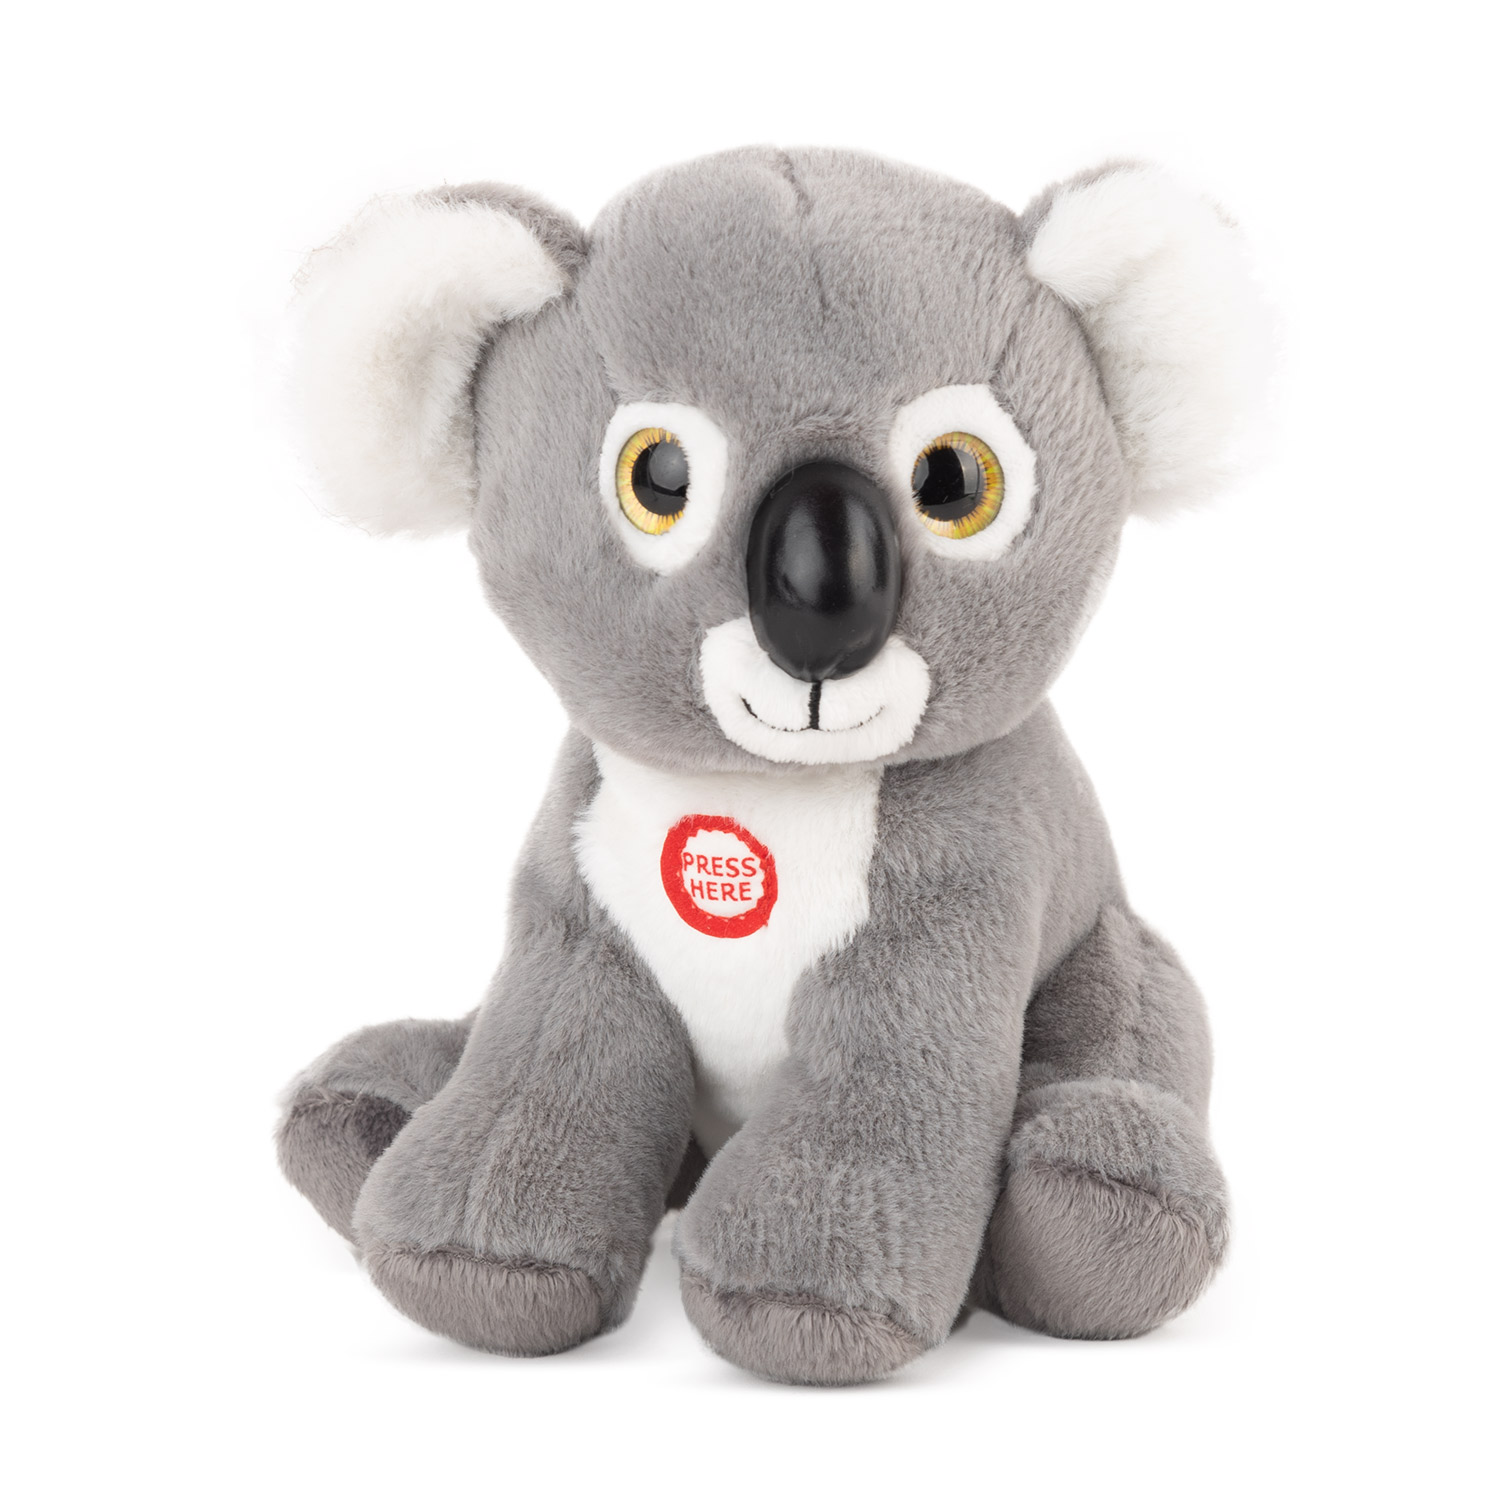 Koala with sound